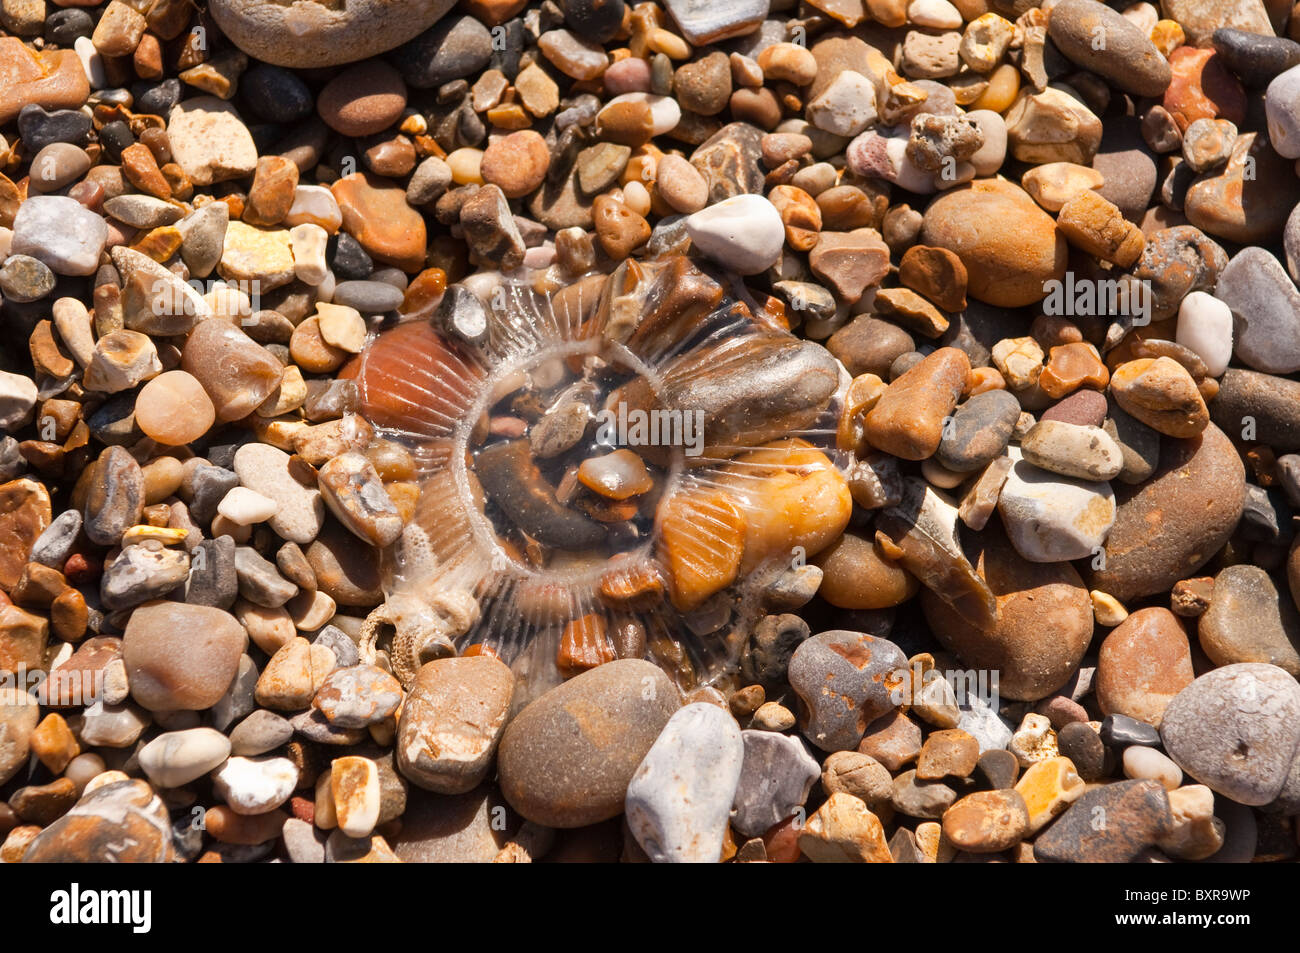 A Jellyfish on a Uk beach Stock Photo